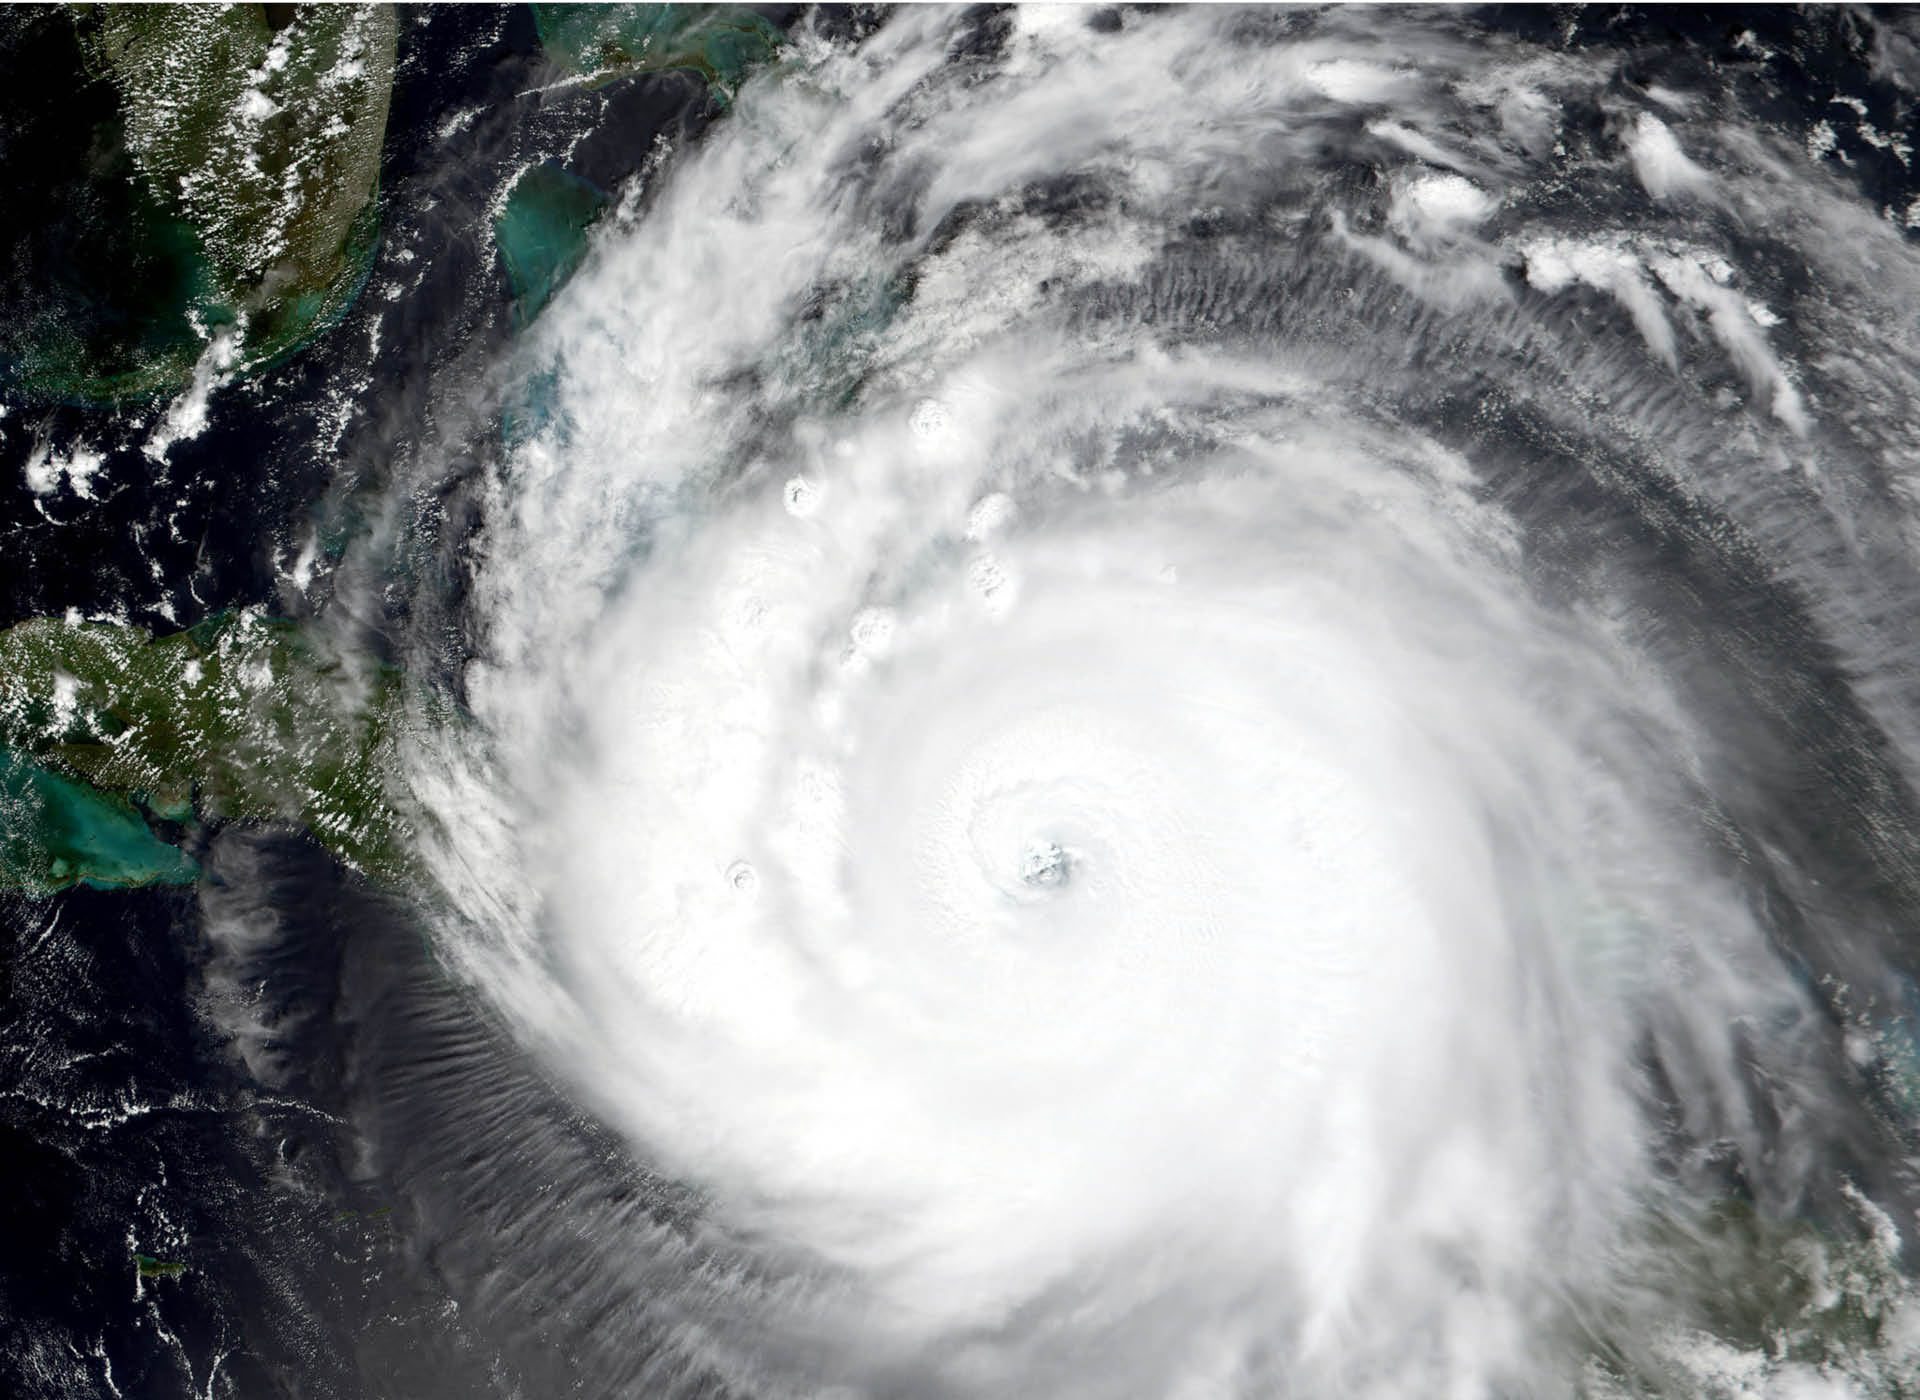 Satelite image of a hurricane